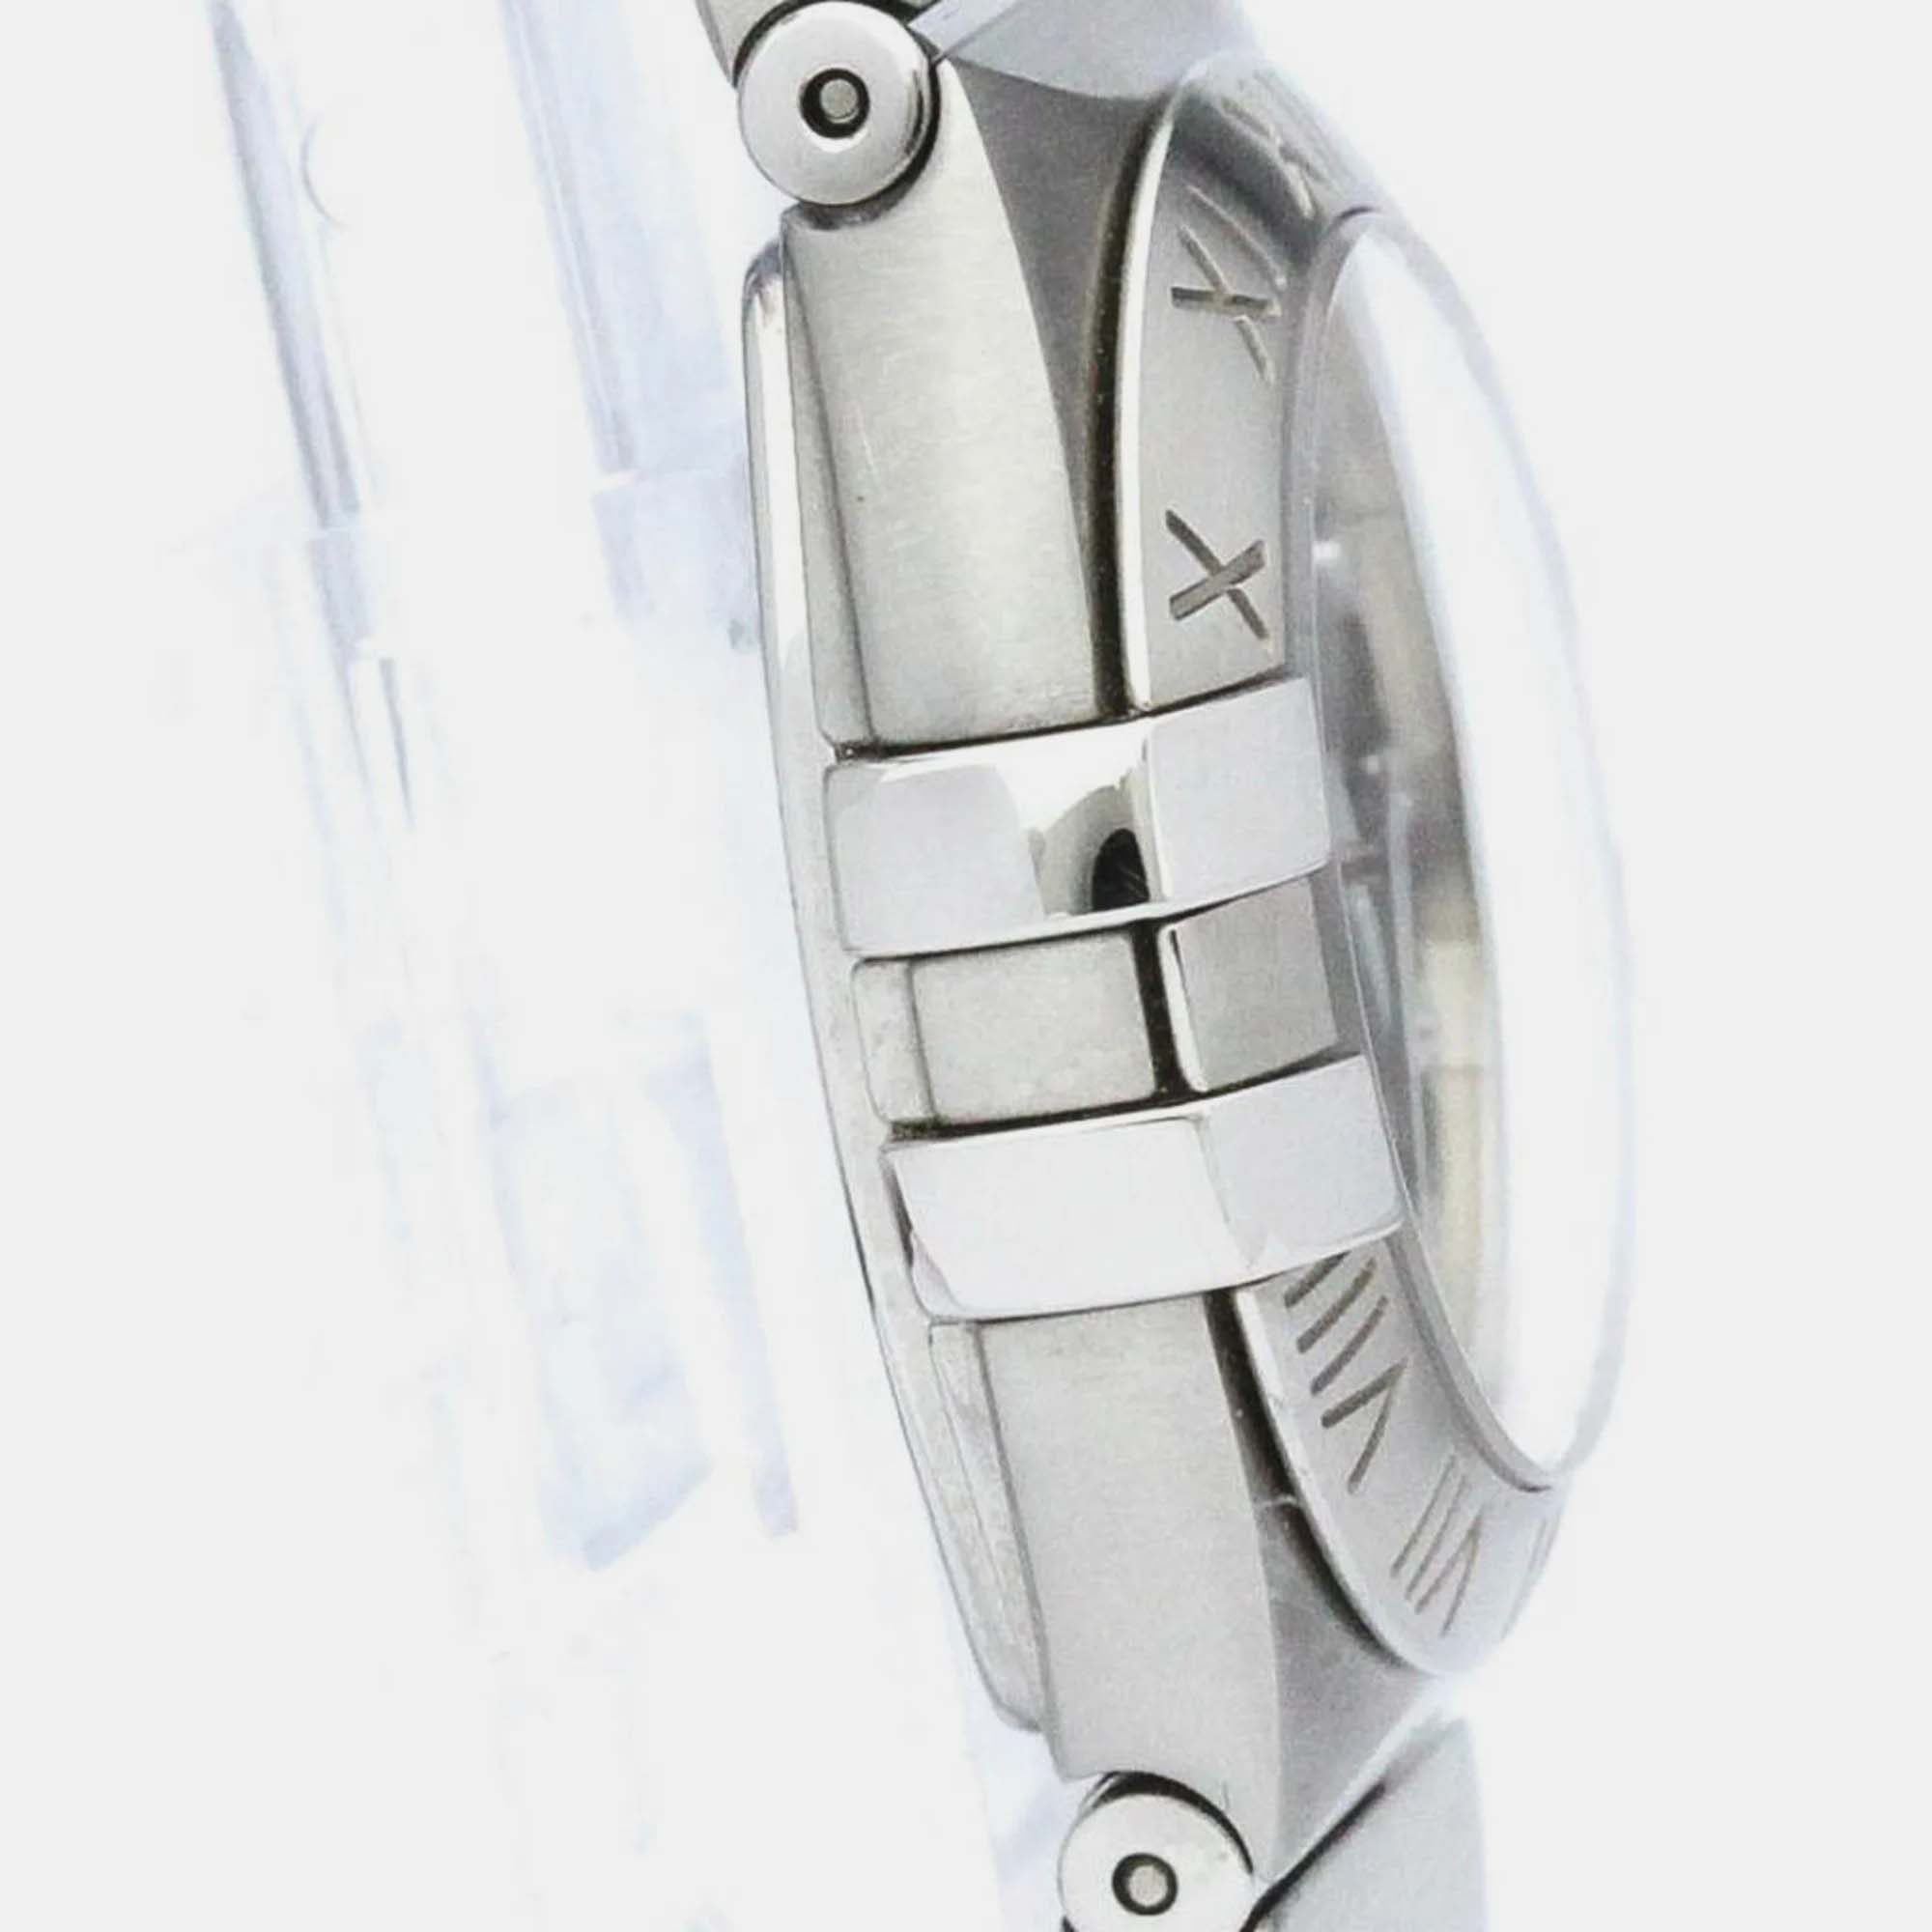 Omega Black Diamond Stainless Steel Constellation 123.10.24.60.51.001 Quartz Women's Wristwatch 24 Mm